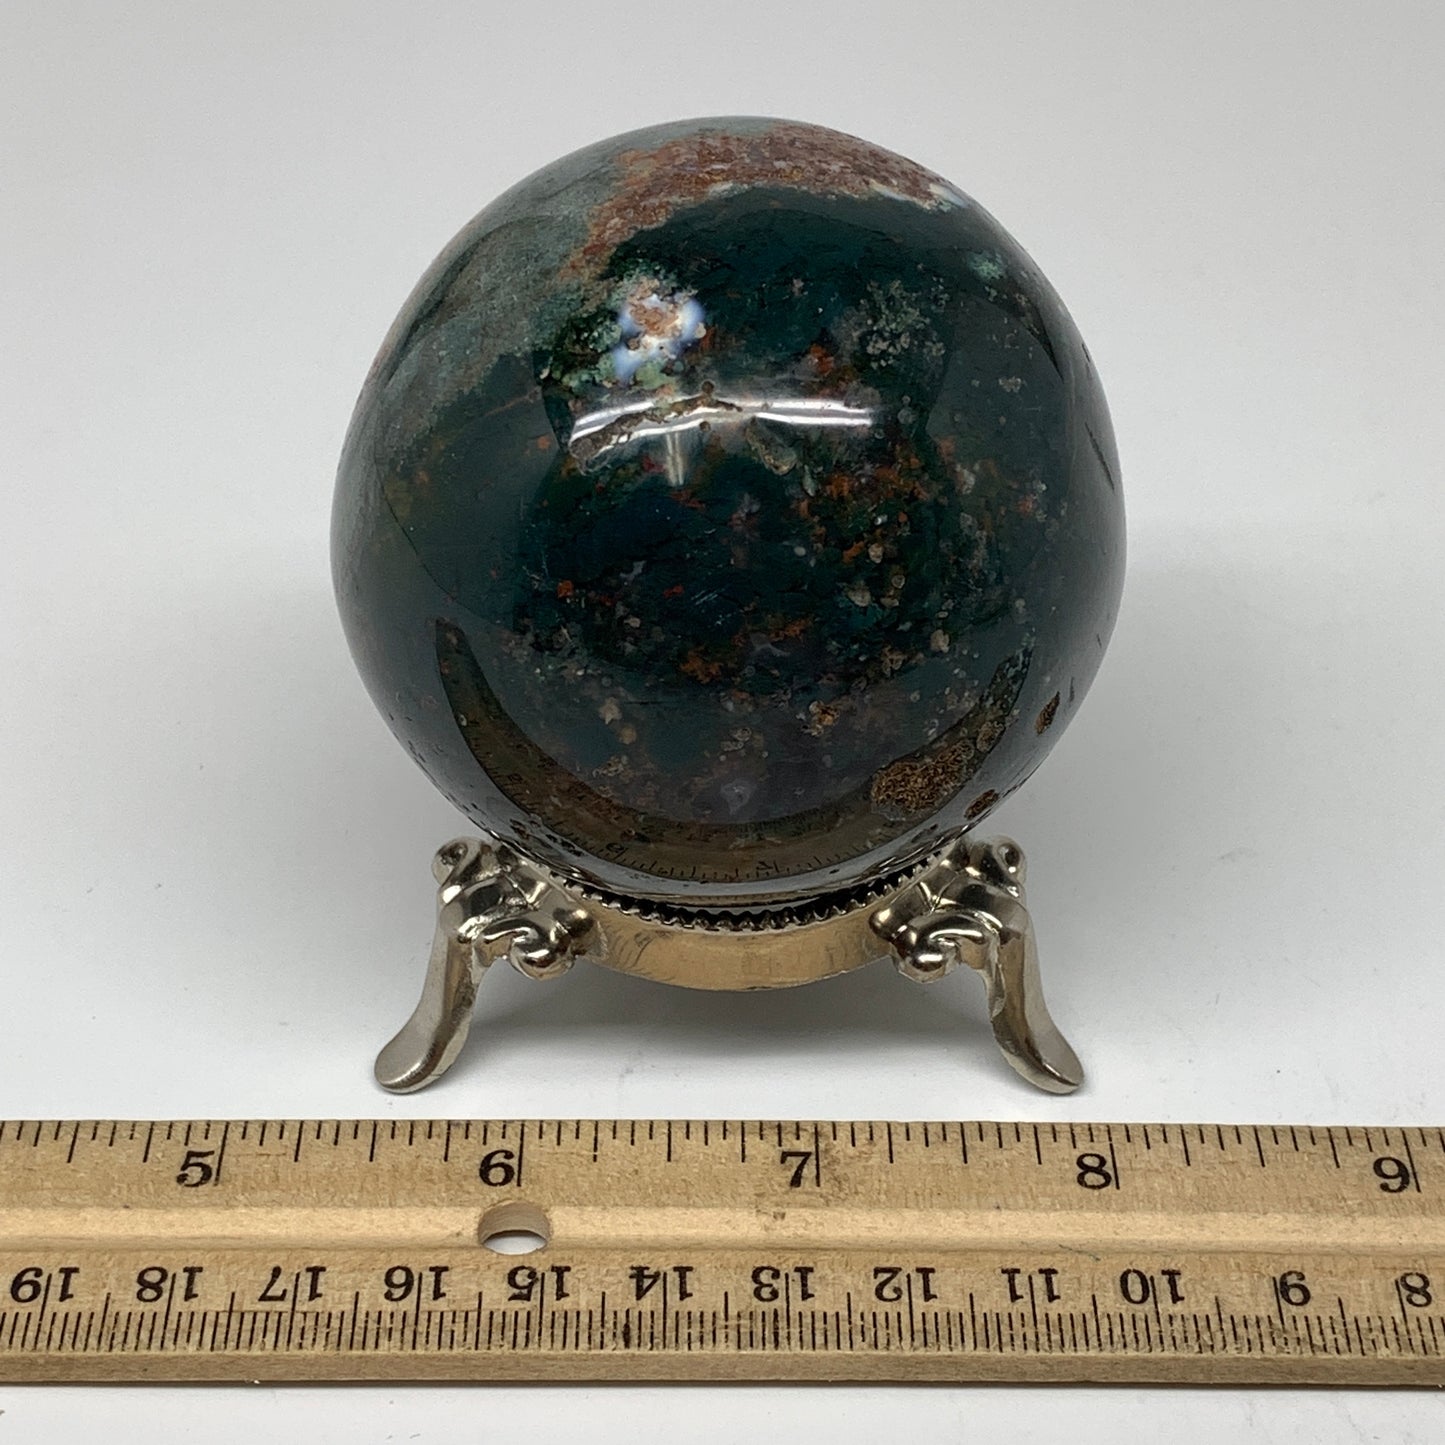 407.8g, 2.7" Natural Ocean Jasper Sphere Ball Crystal Reiki @Madagascar, B2697